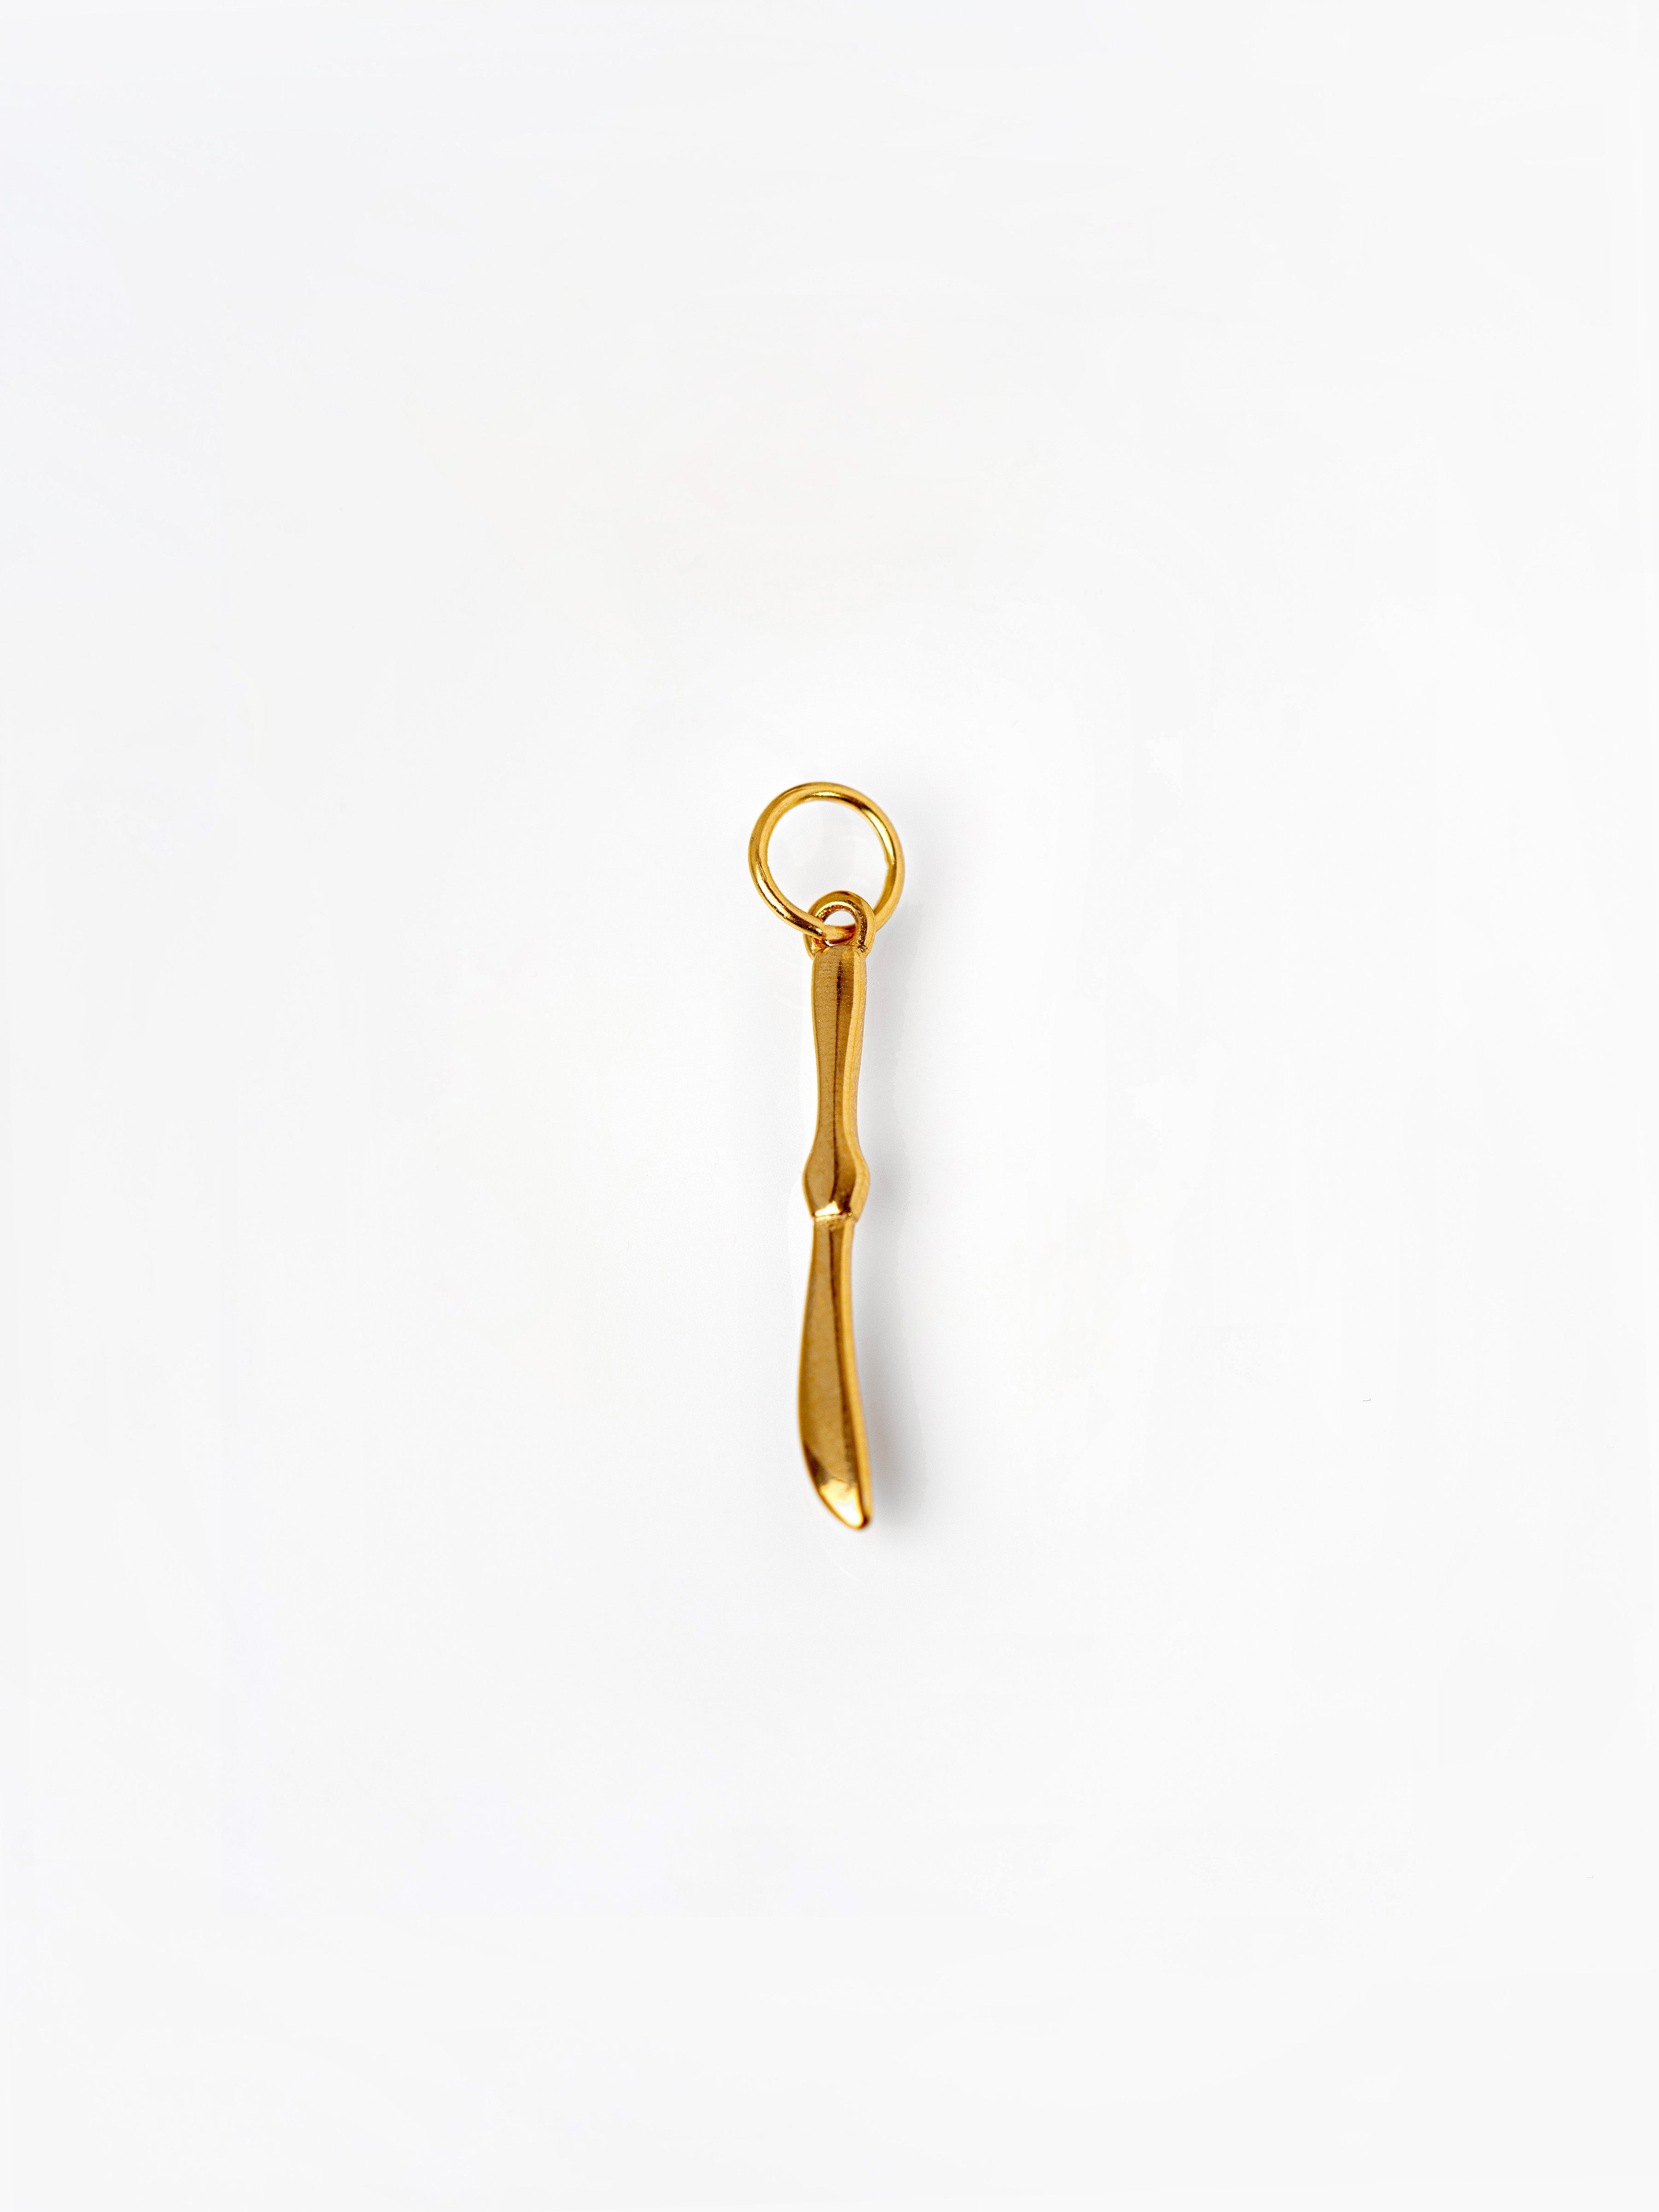 Gold Tiny Knife Pendant / Charm